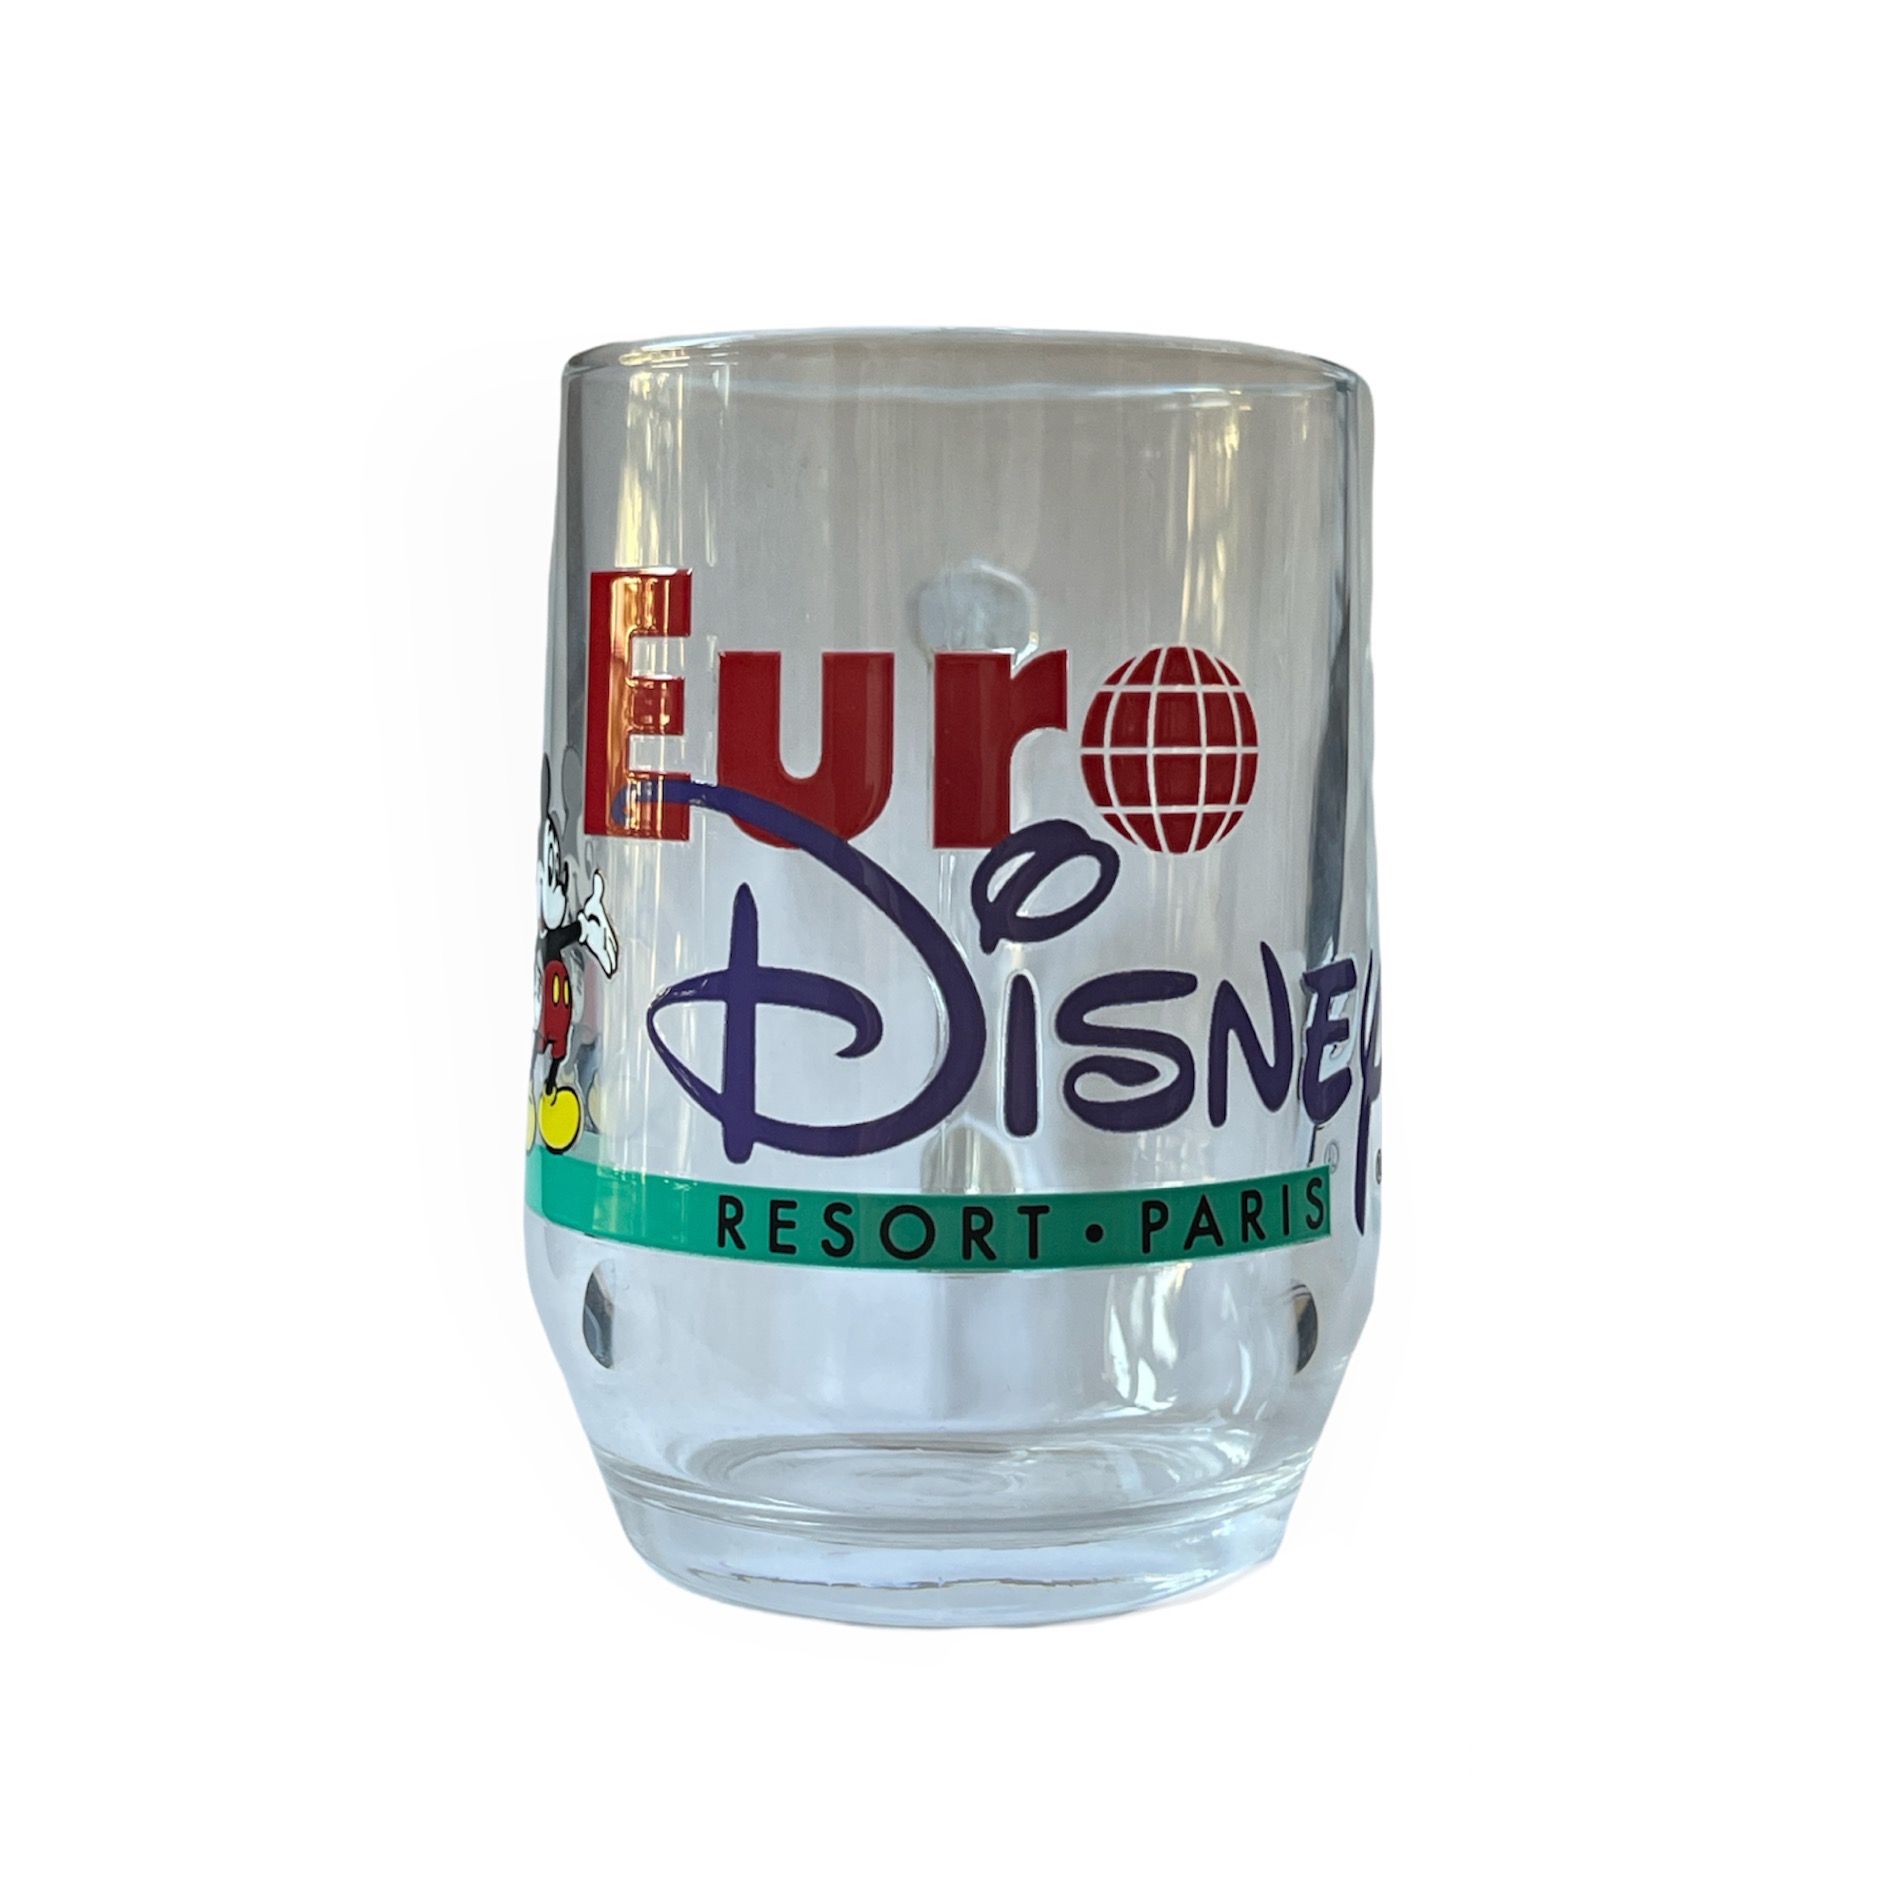 Disney - Mickey Mouse : Mug en verre &quot;92&quot;